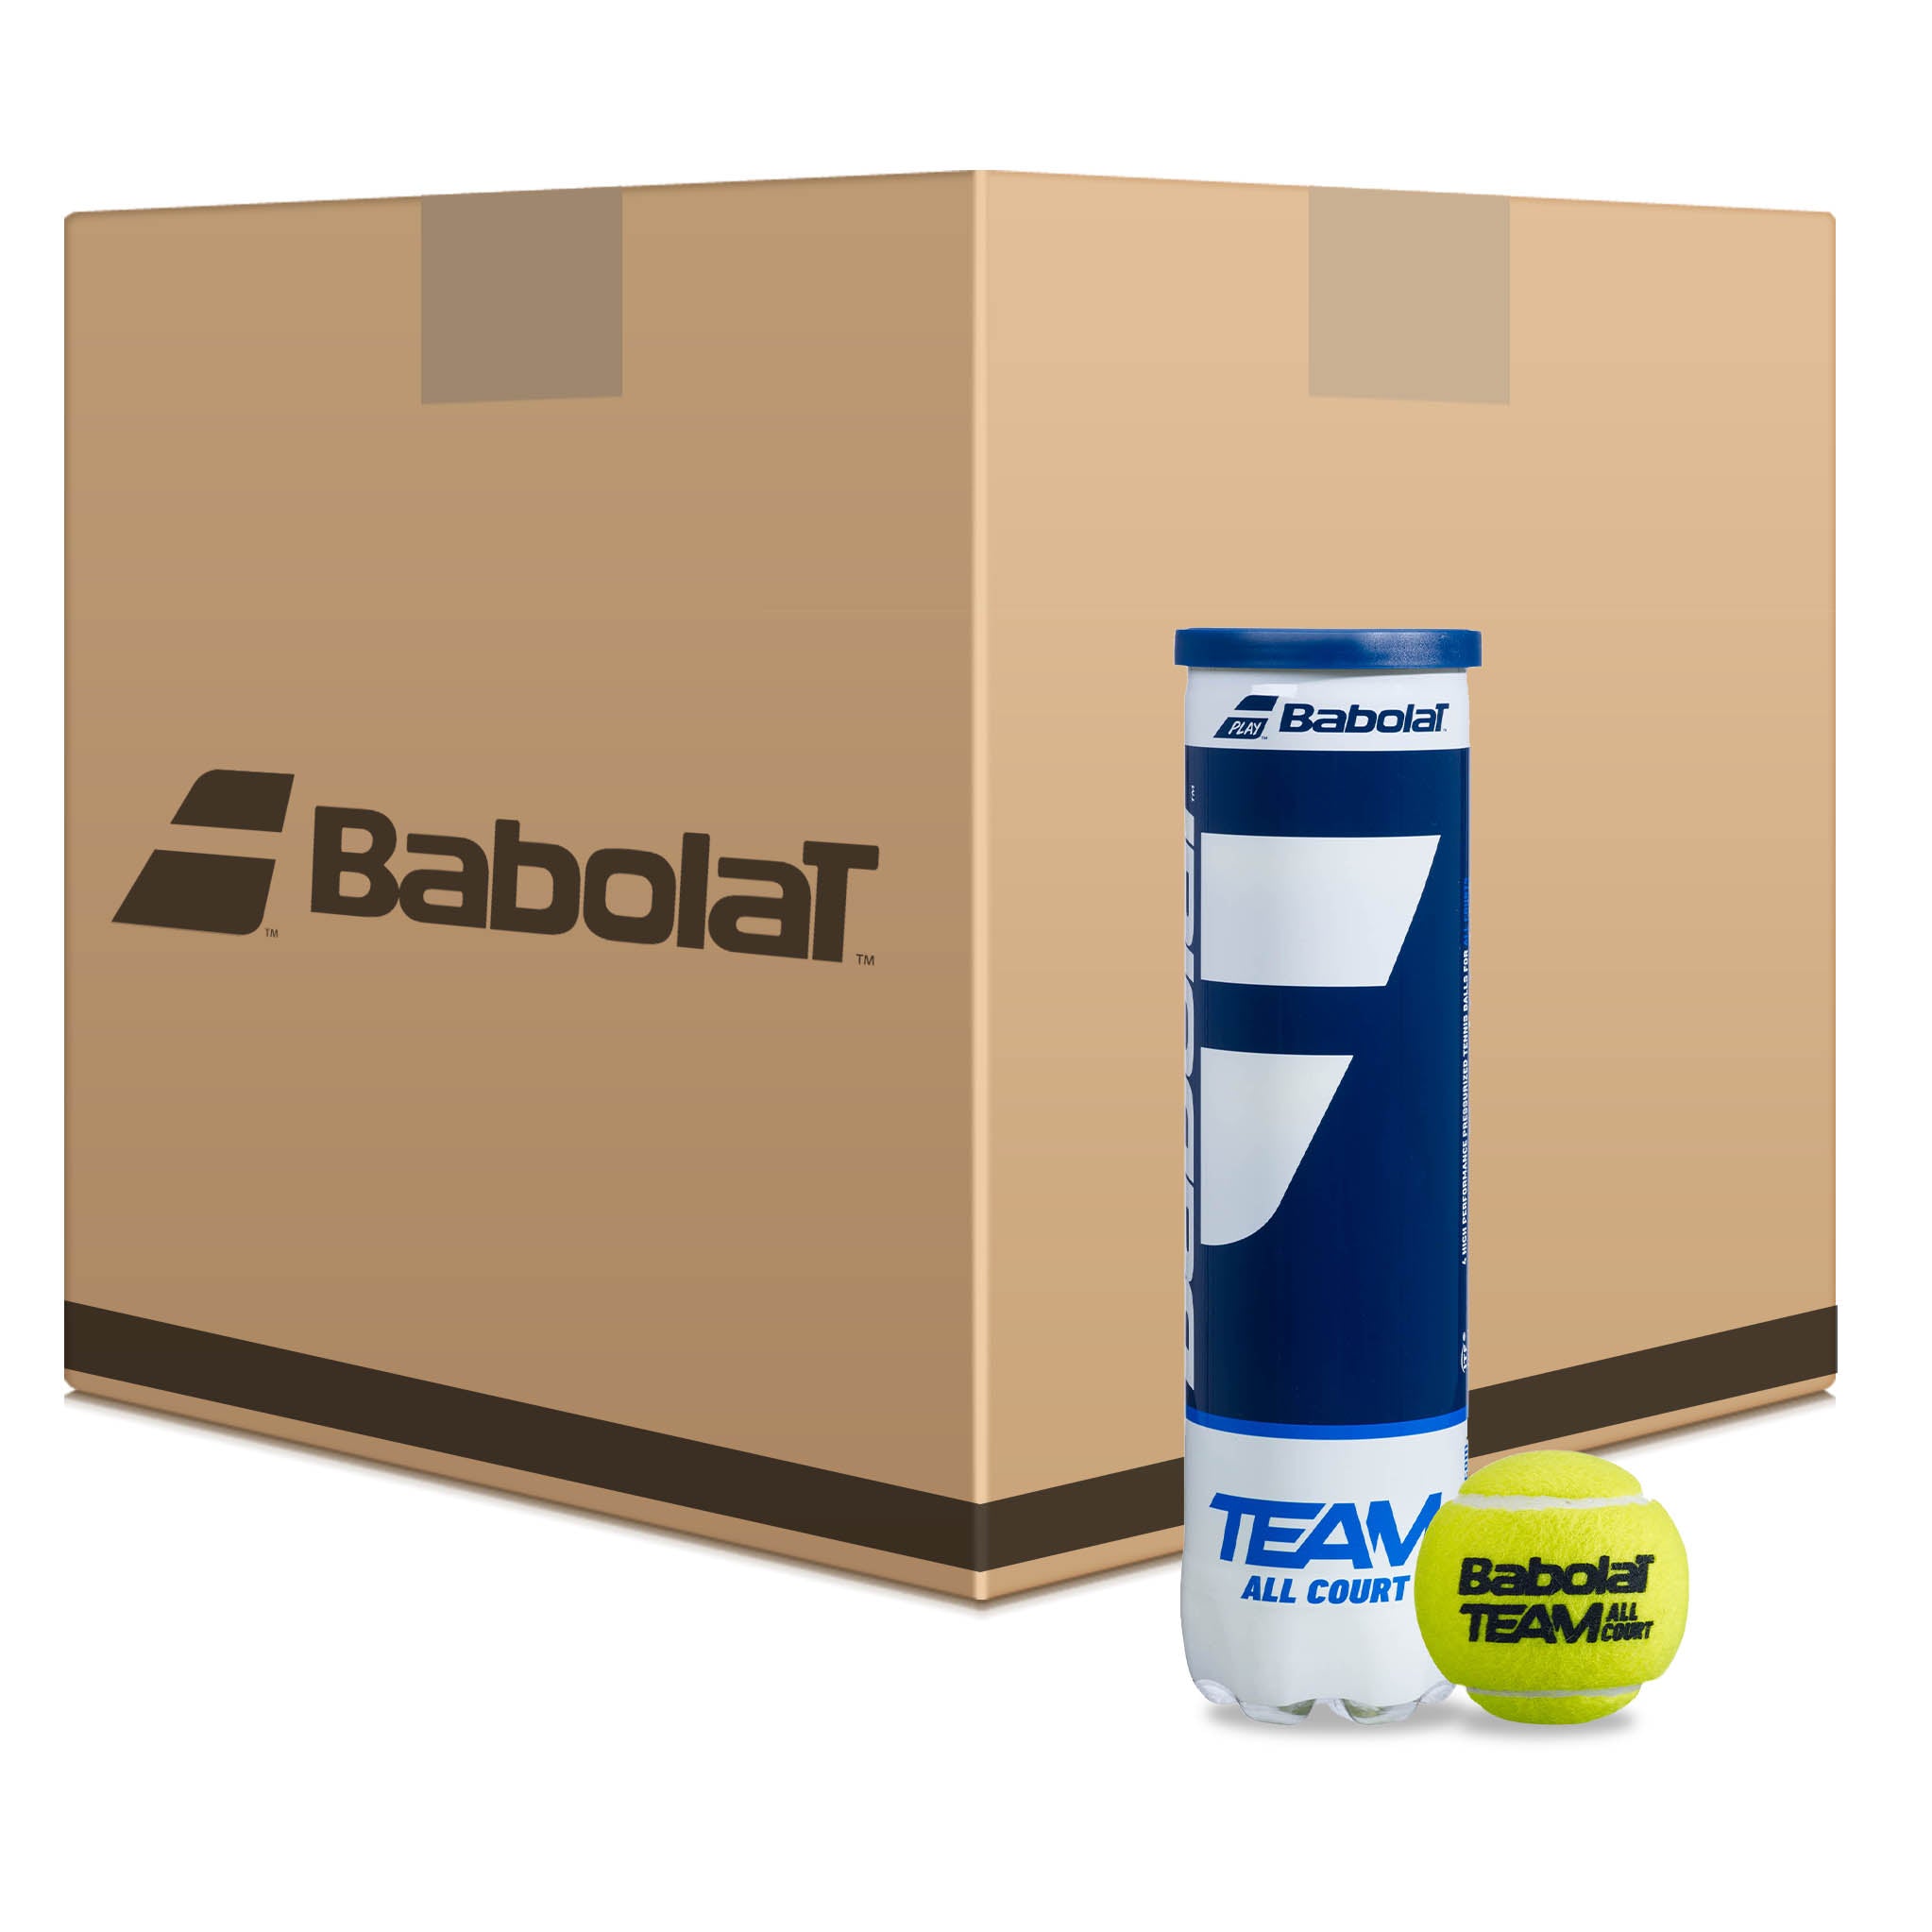 Babolat Team All Court Tennis Balls - 6 Dozen